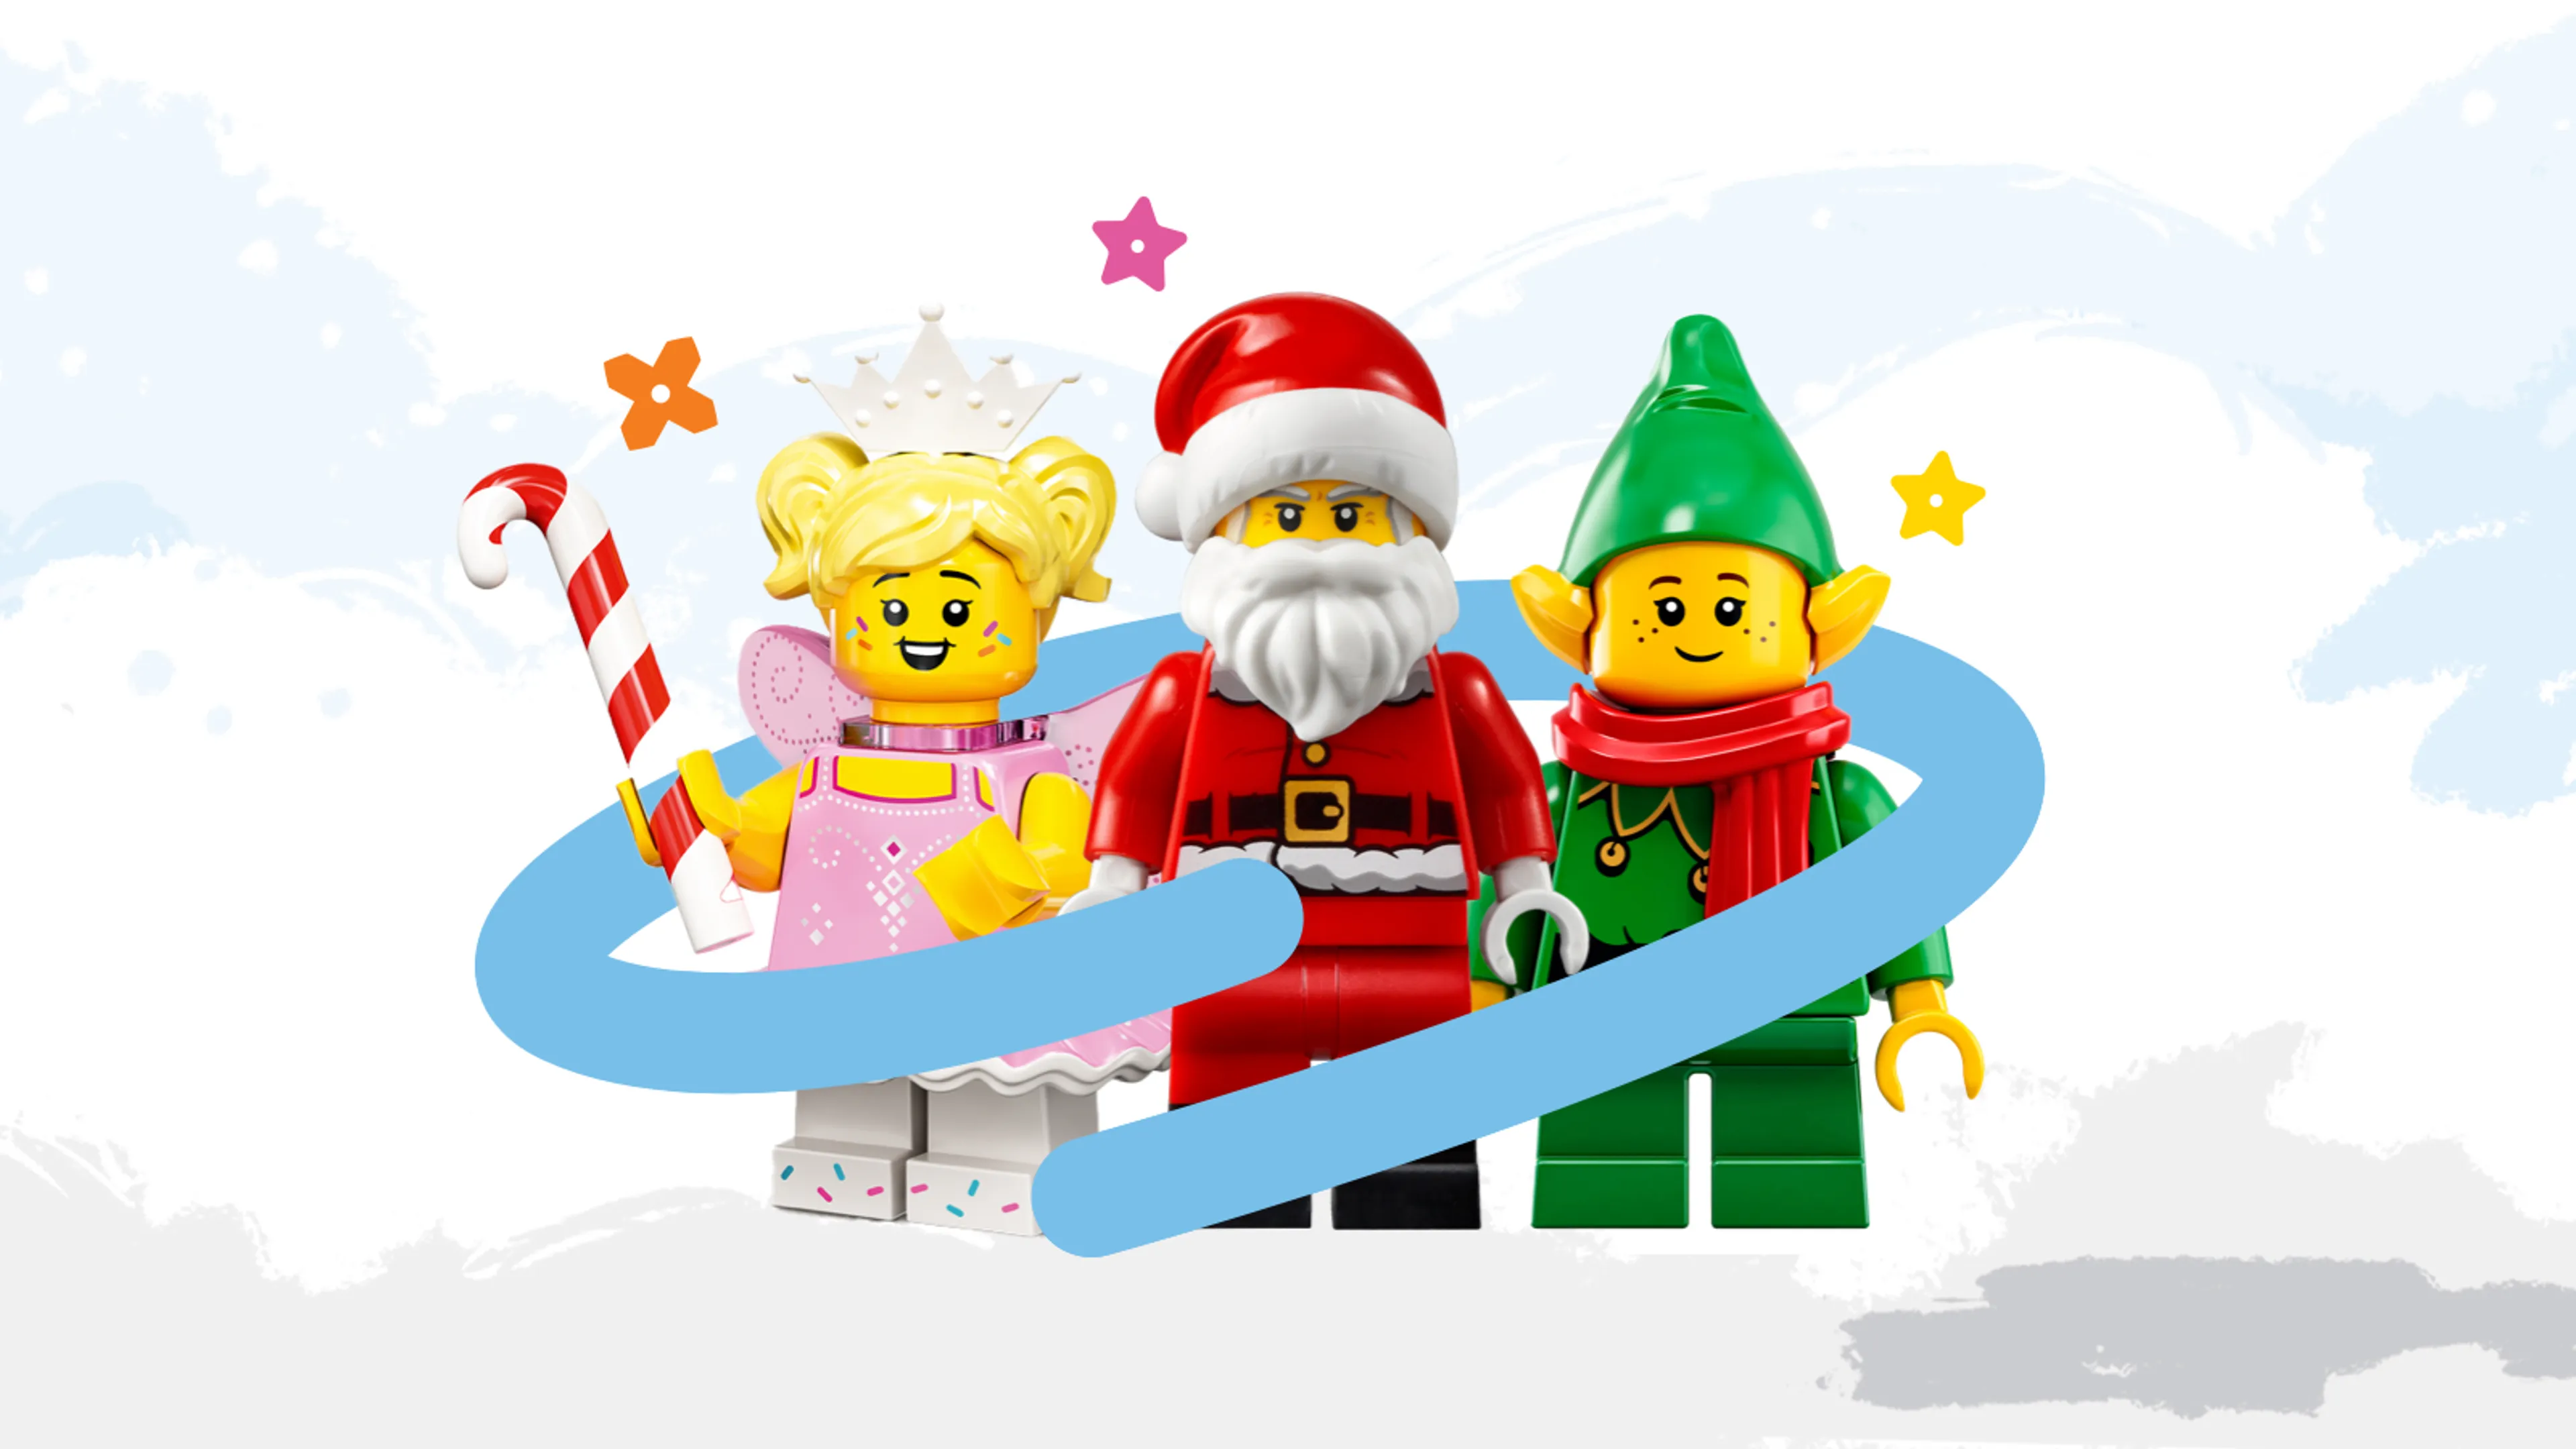 A fairy, a Santa and an elf minifigure